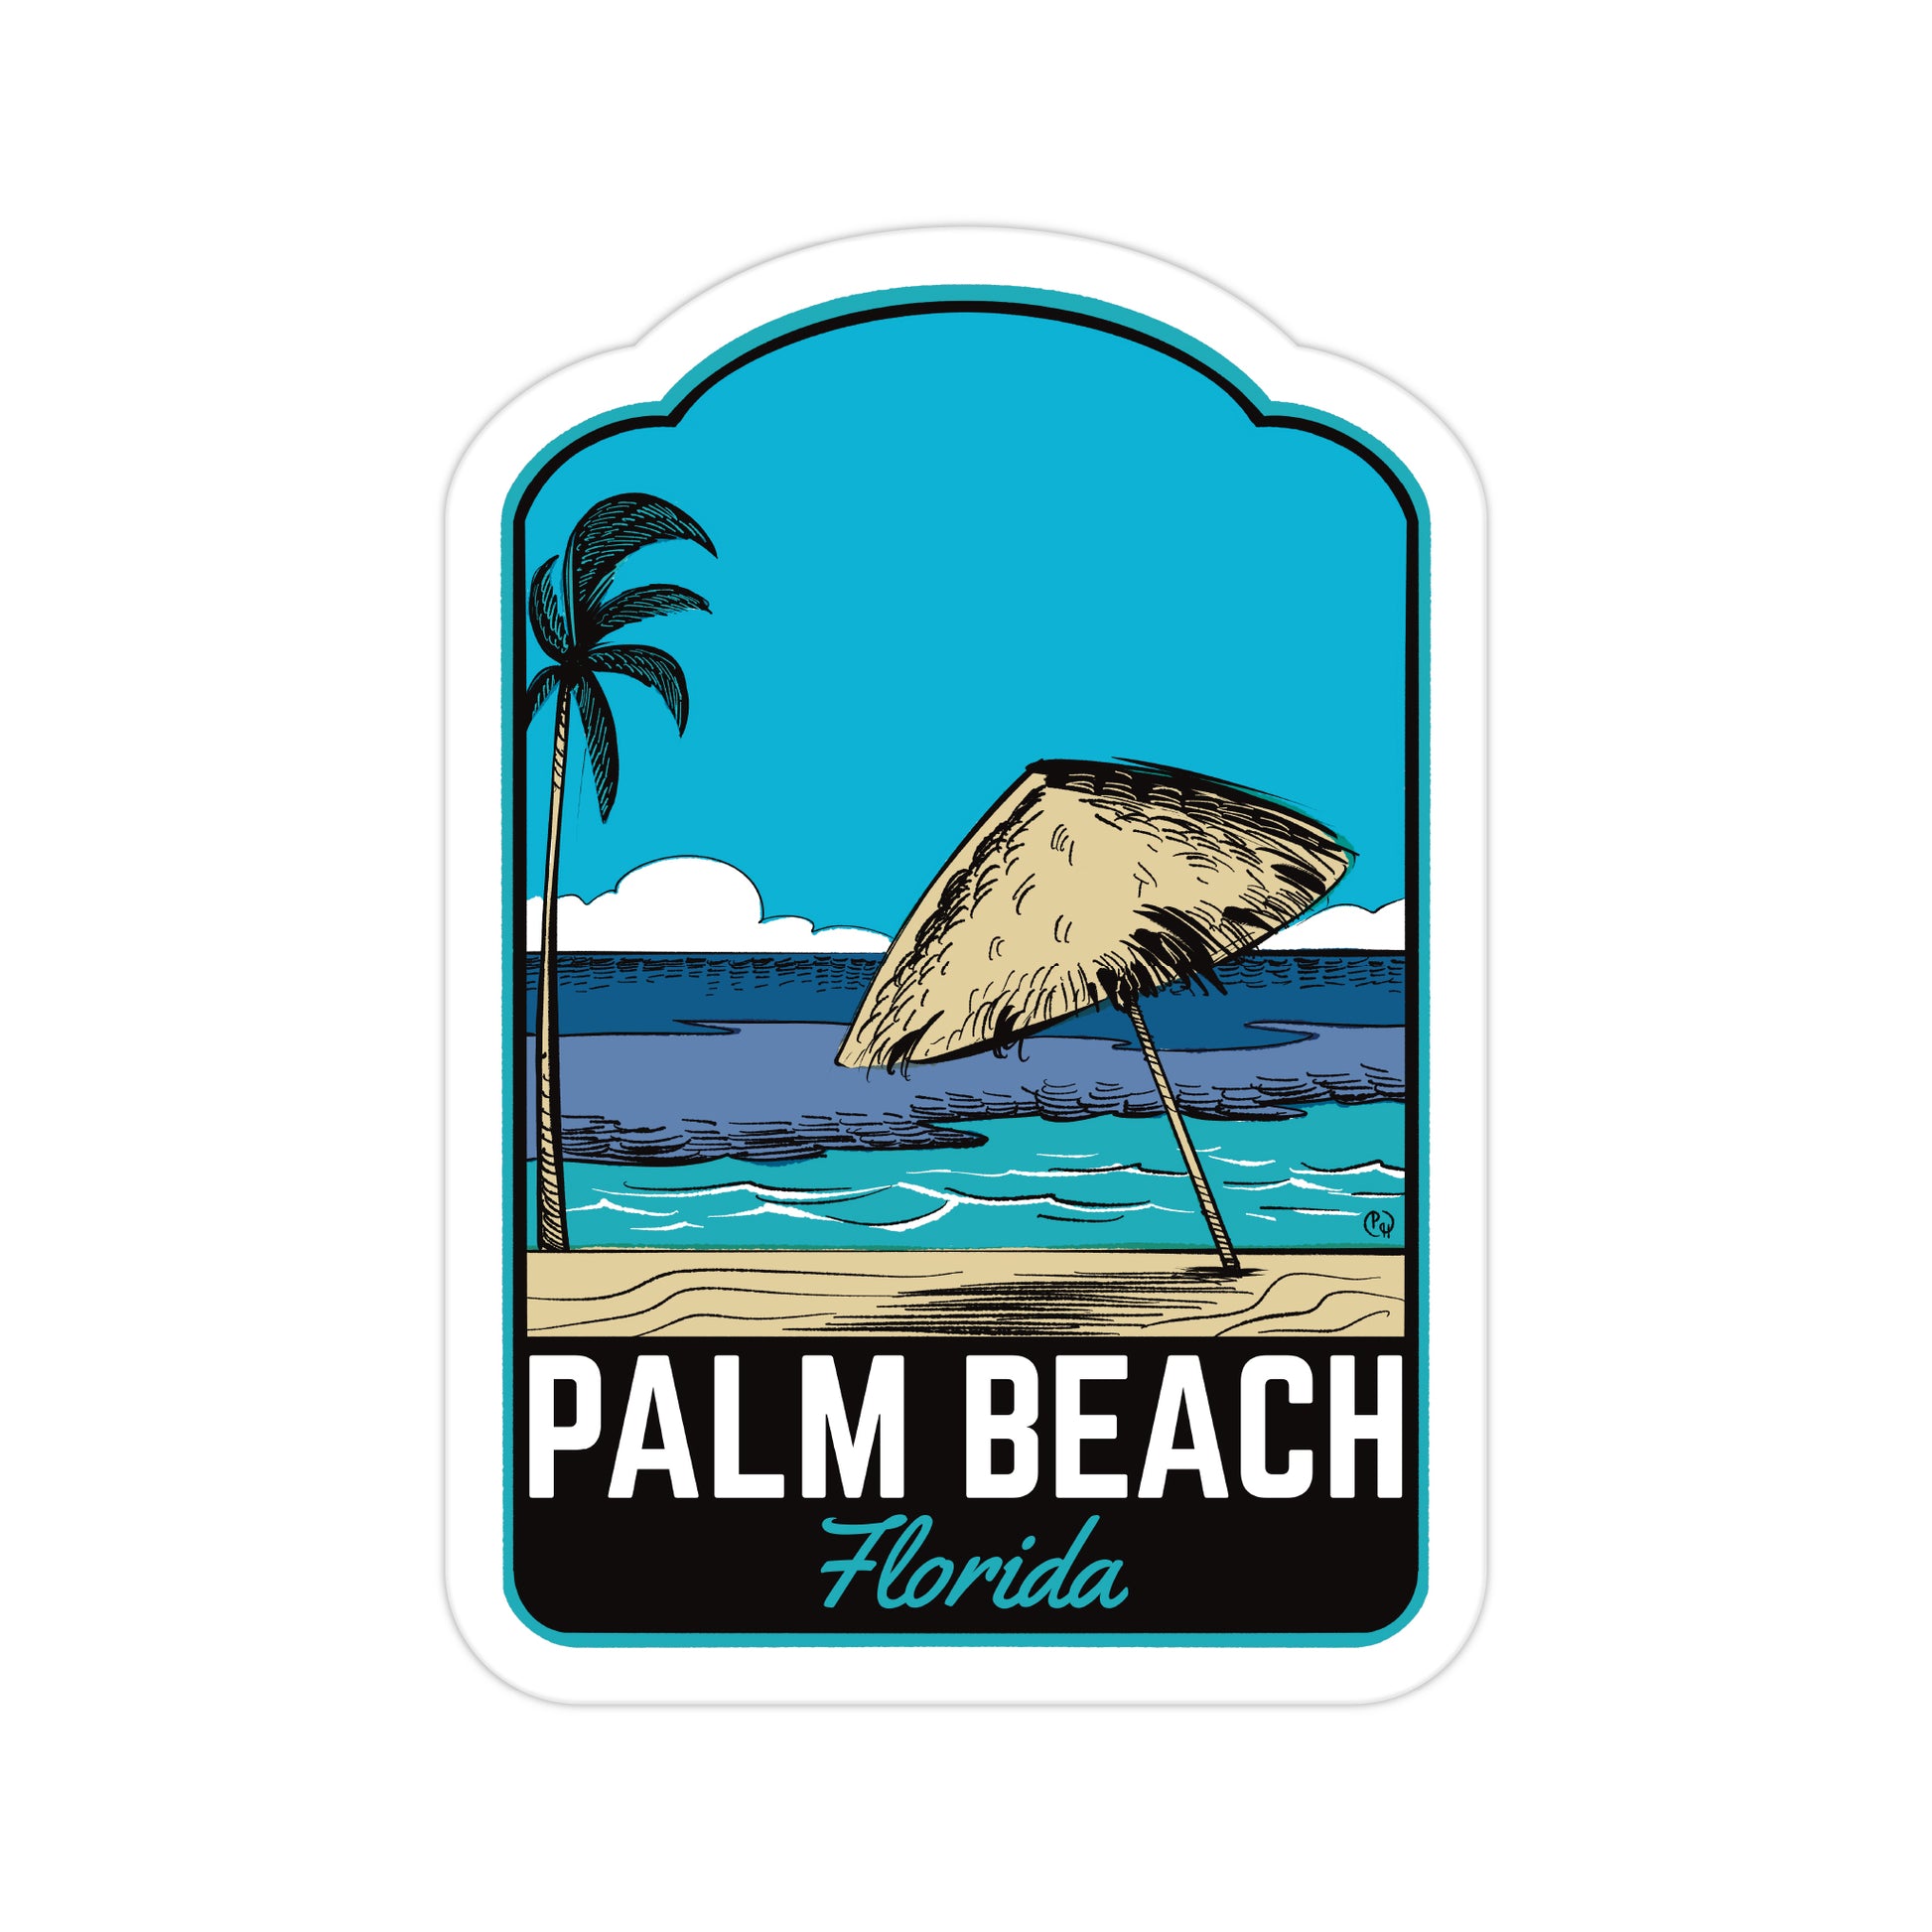 A sticker of Palm Beach Florida